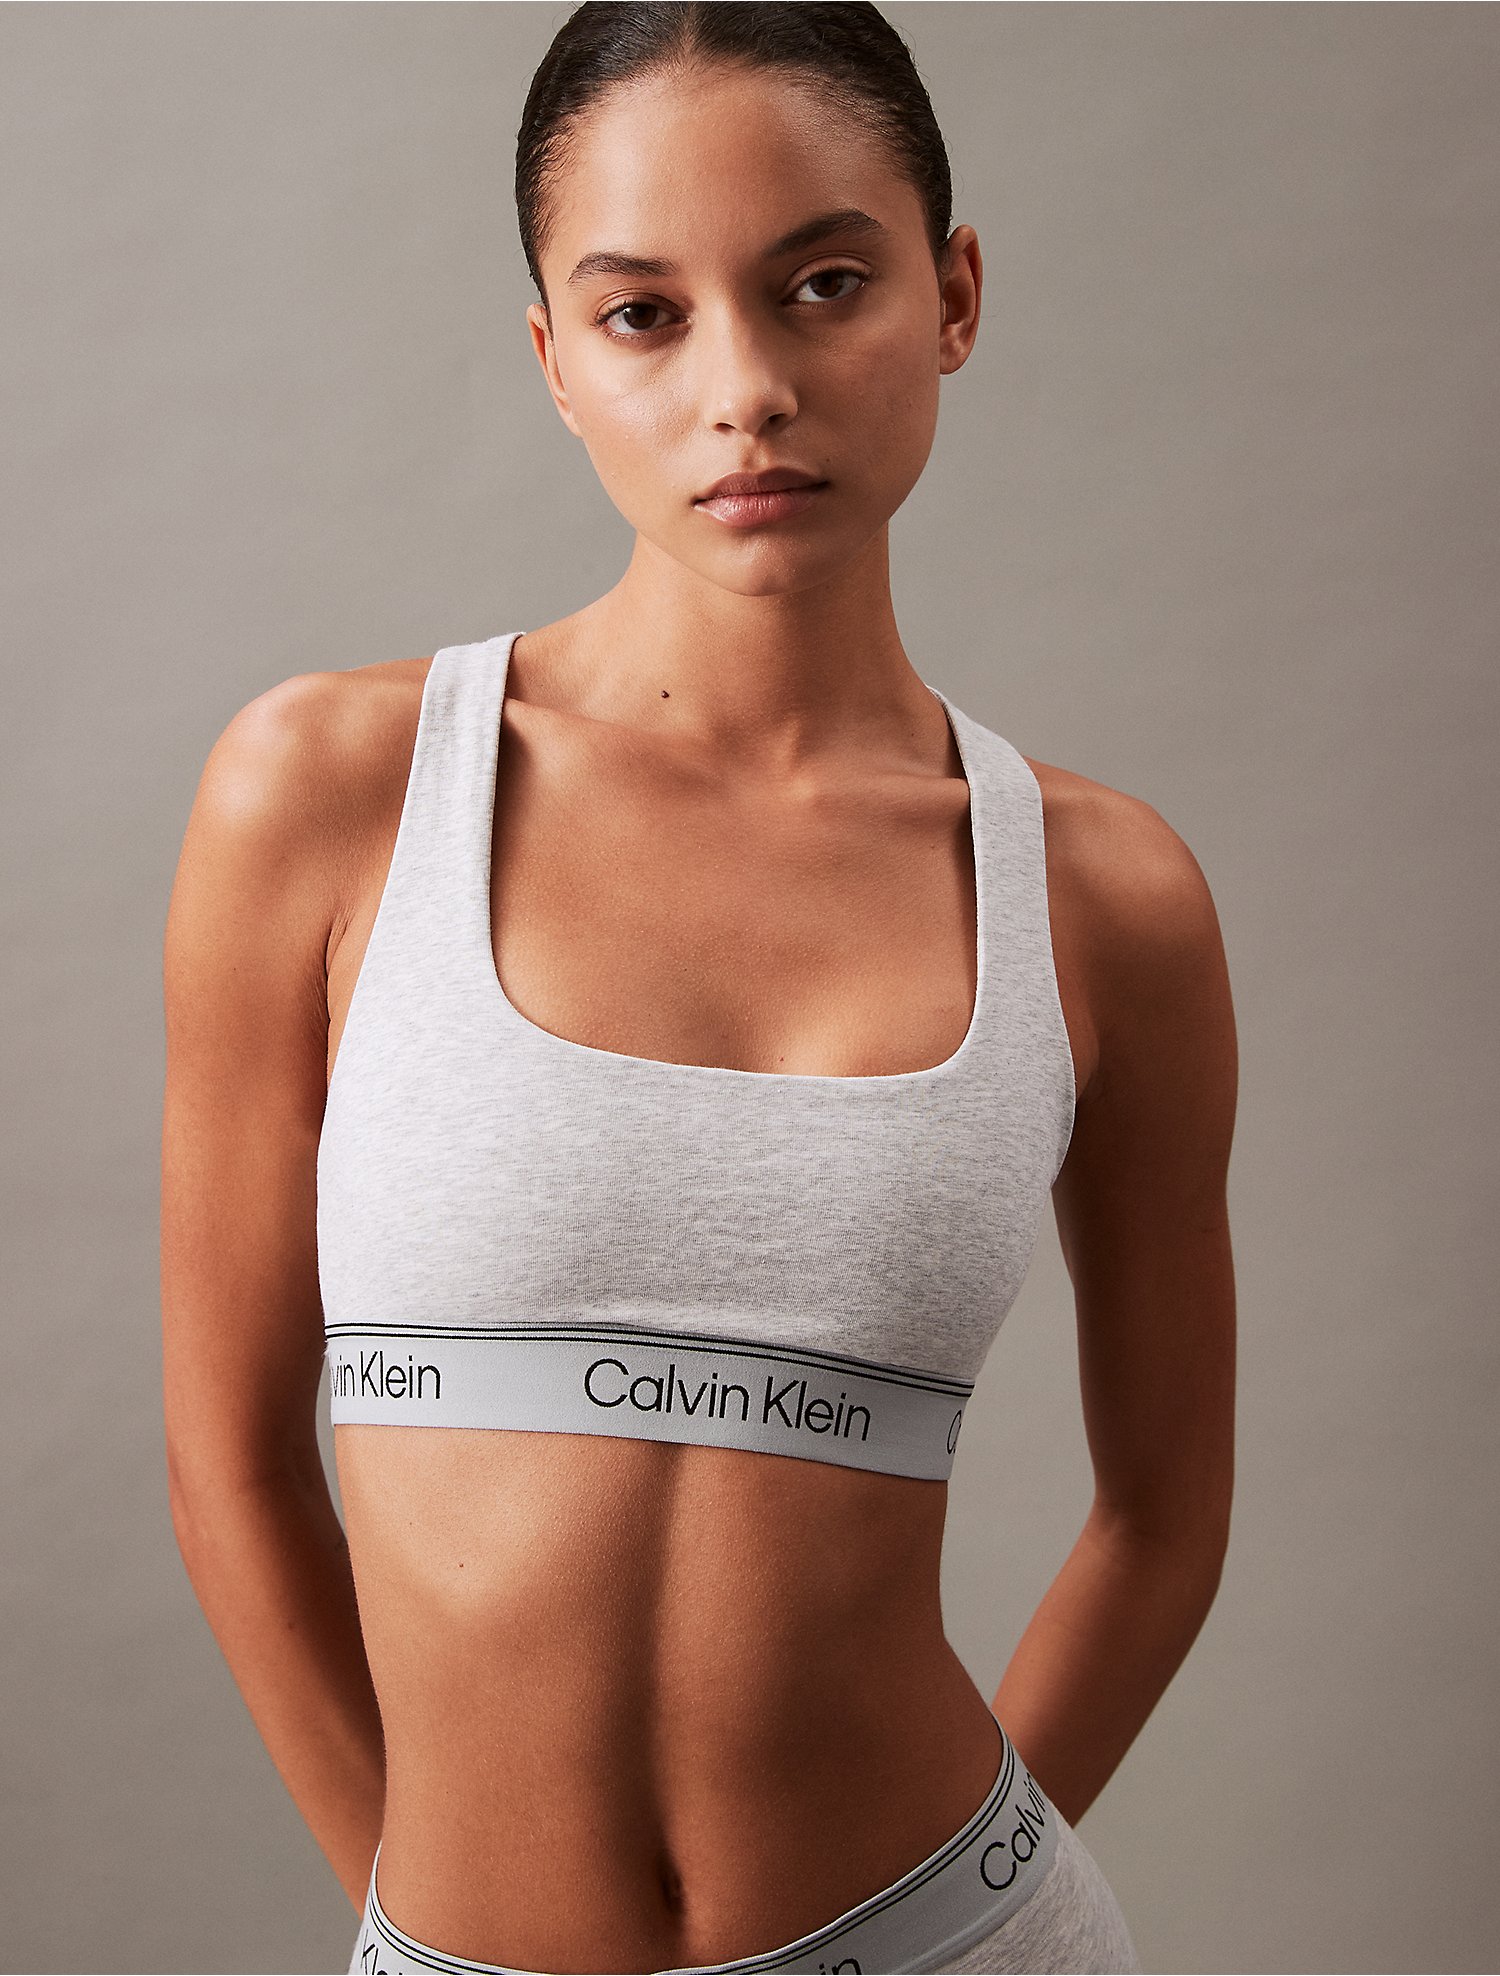 Verklaring verslag doen van mout Calvin Klein Athletic Unlined Bralette | Calvin Klein